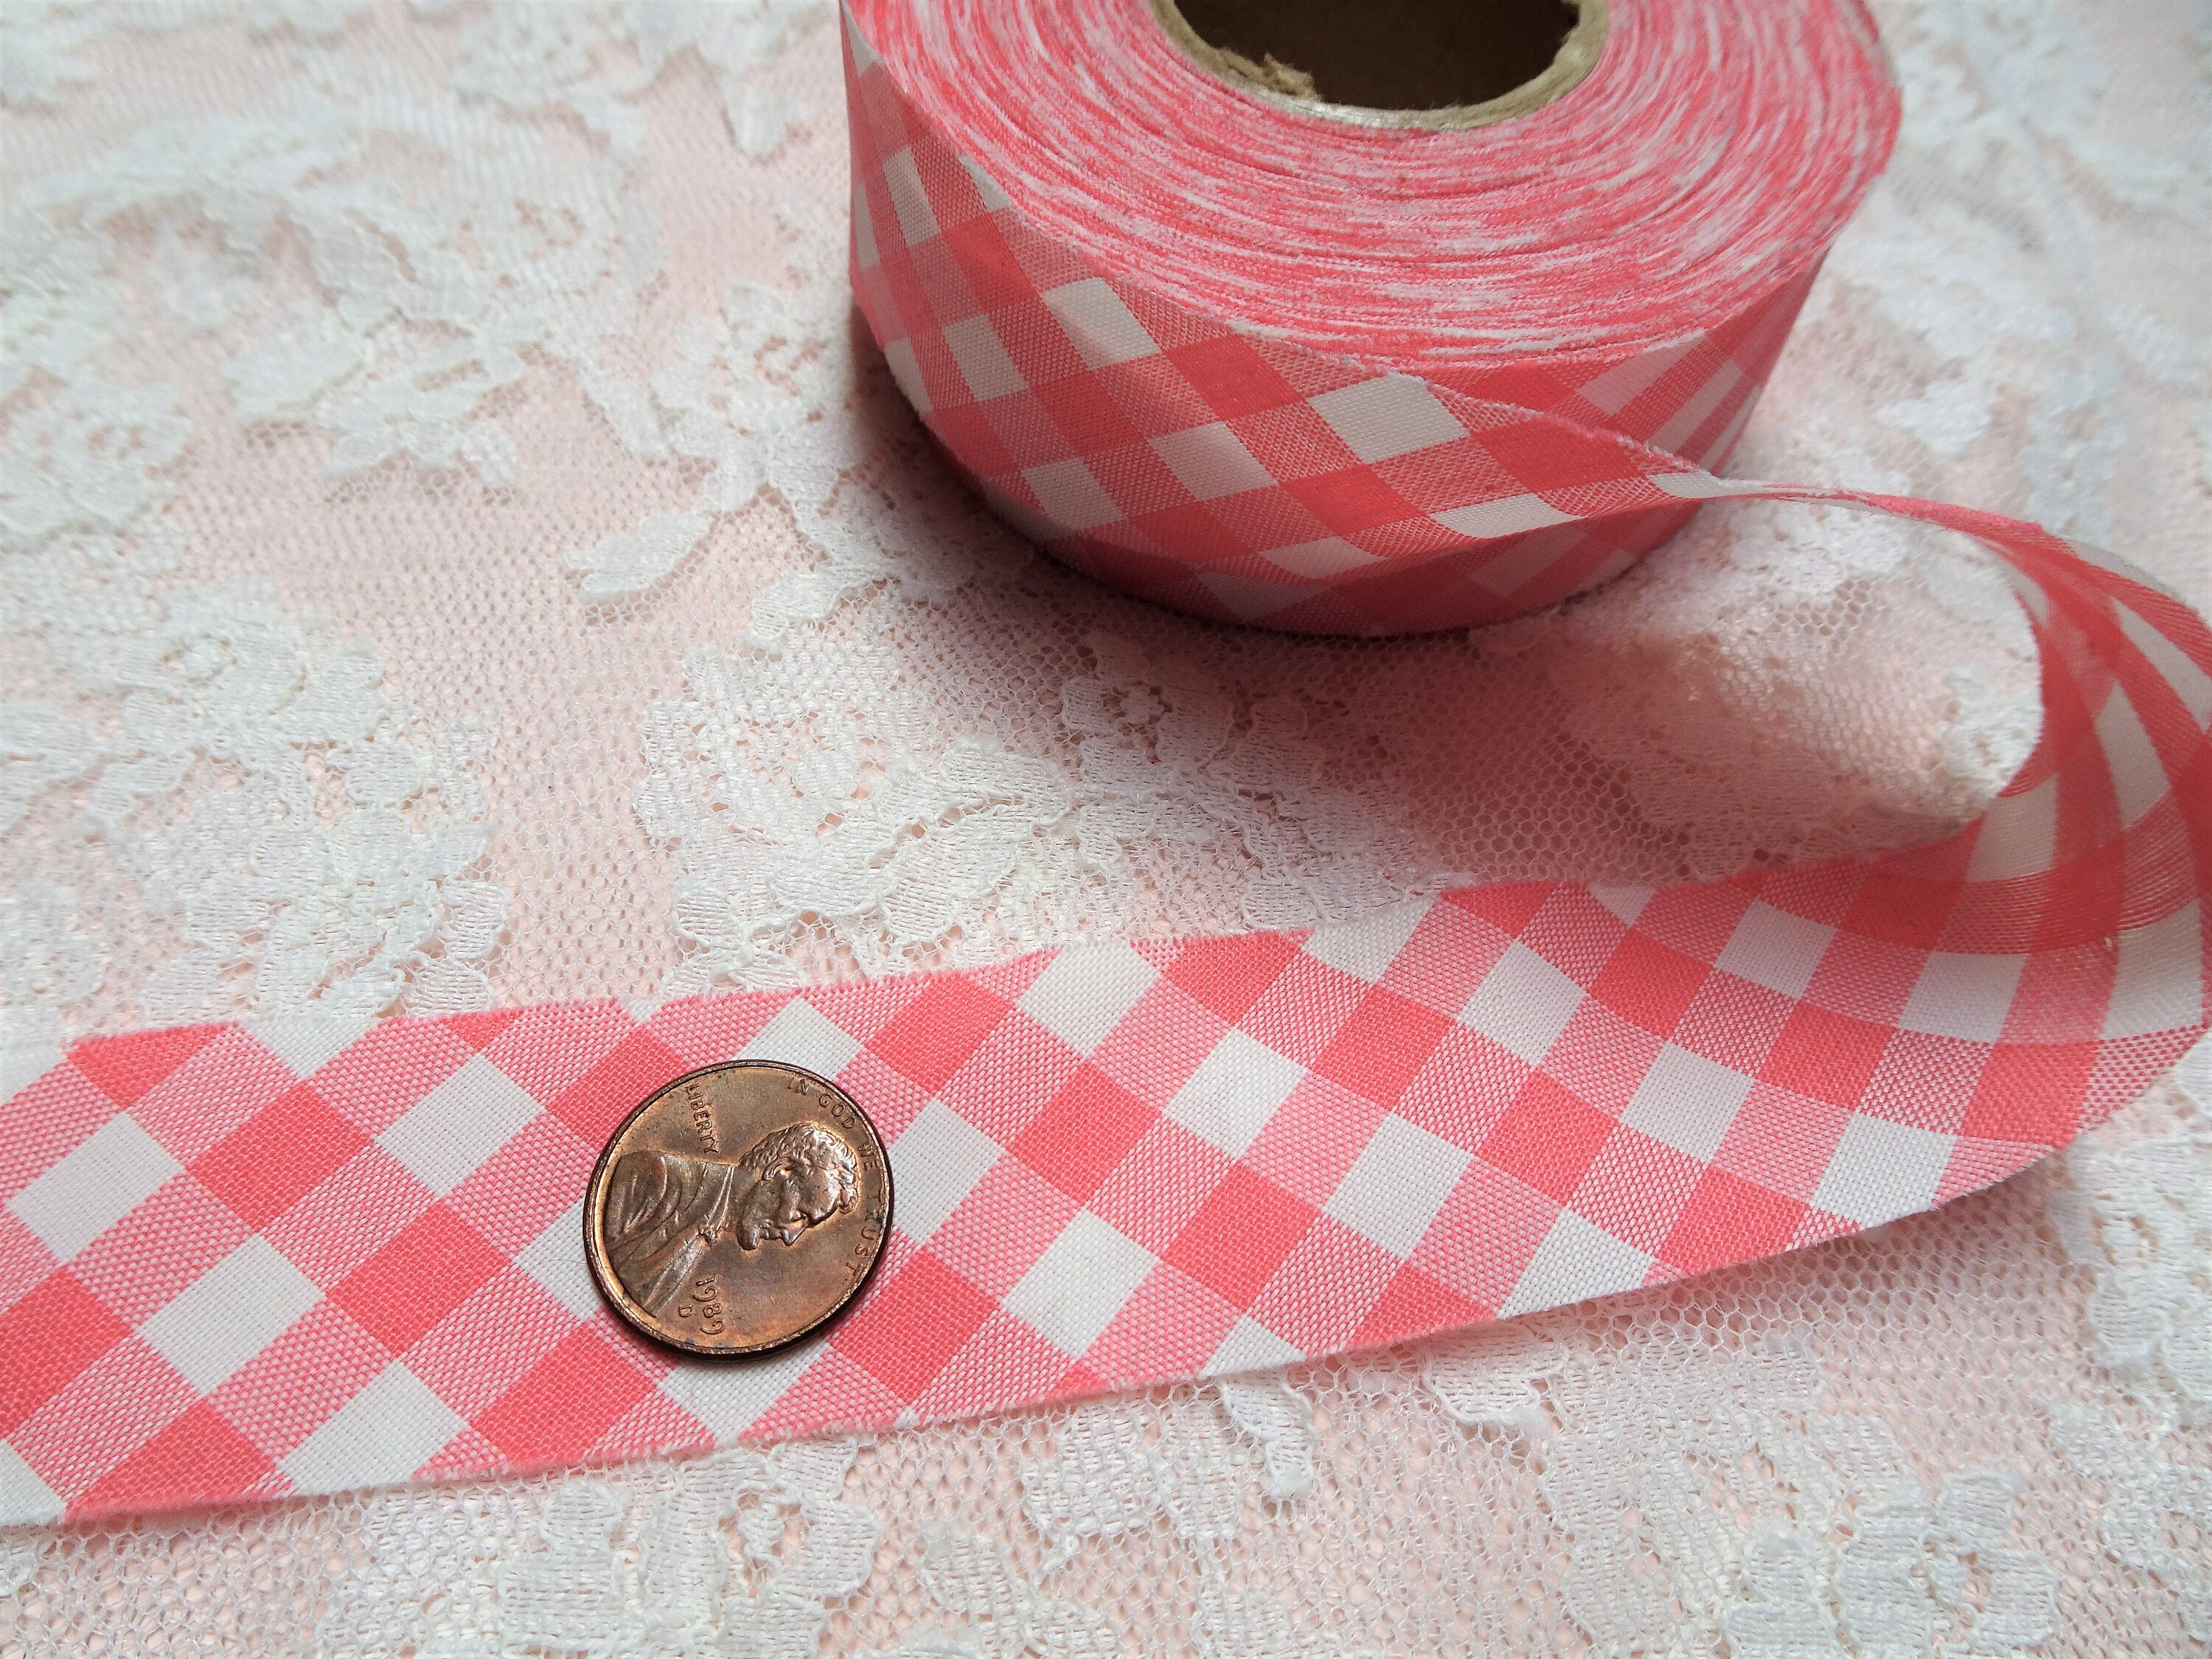 LOVELY Vintage French Pink White Gingham Ribbon Trim Bias Cut